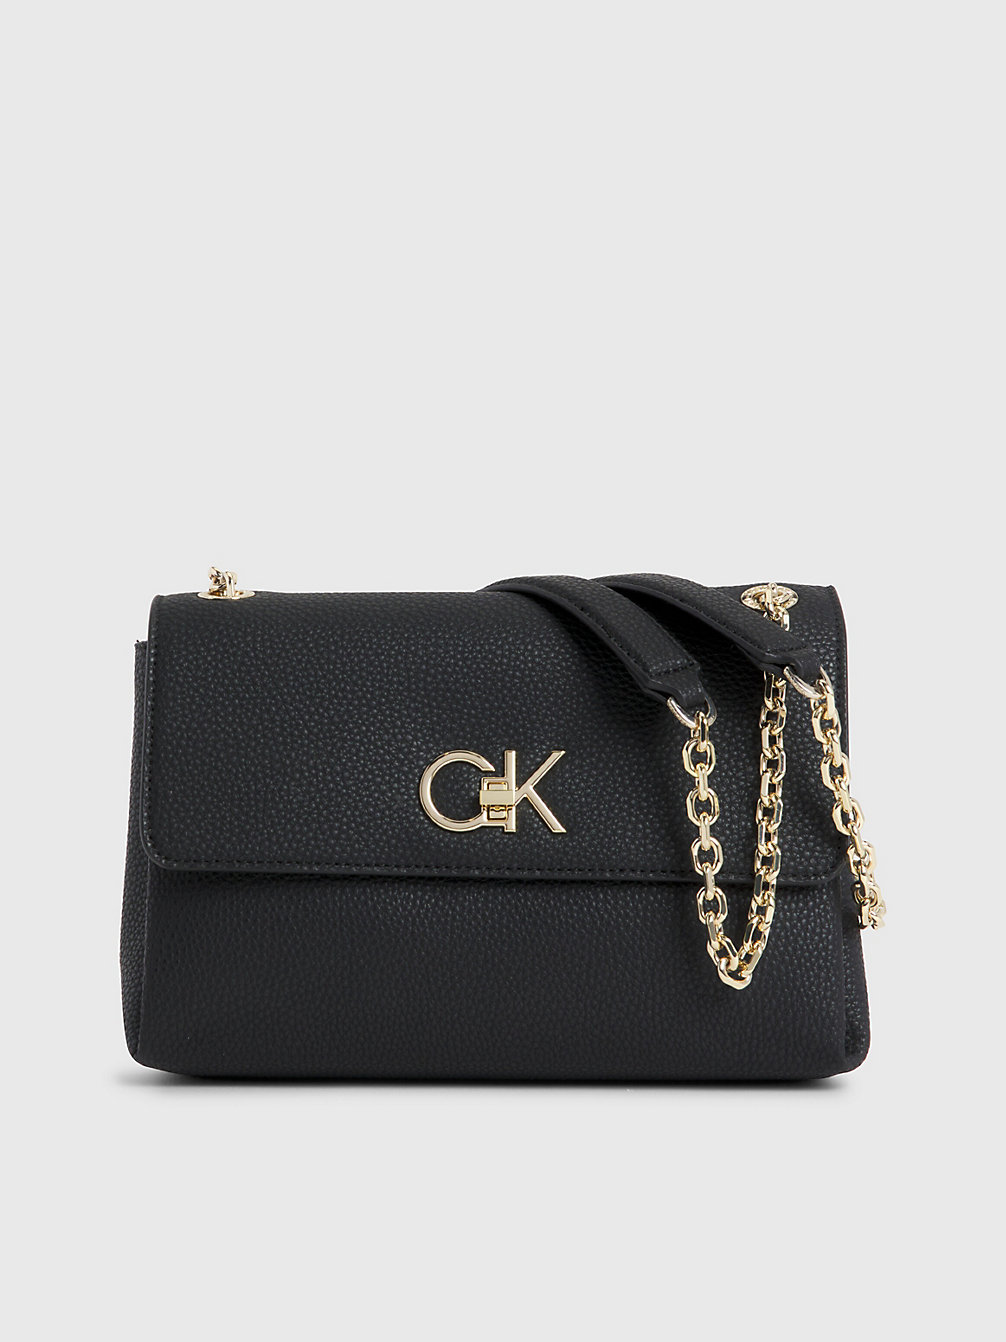 CK BLACK > Wandelbare Schultertasche Aus Recycling-Material > undefined Damen - Calvin Klein